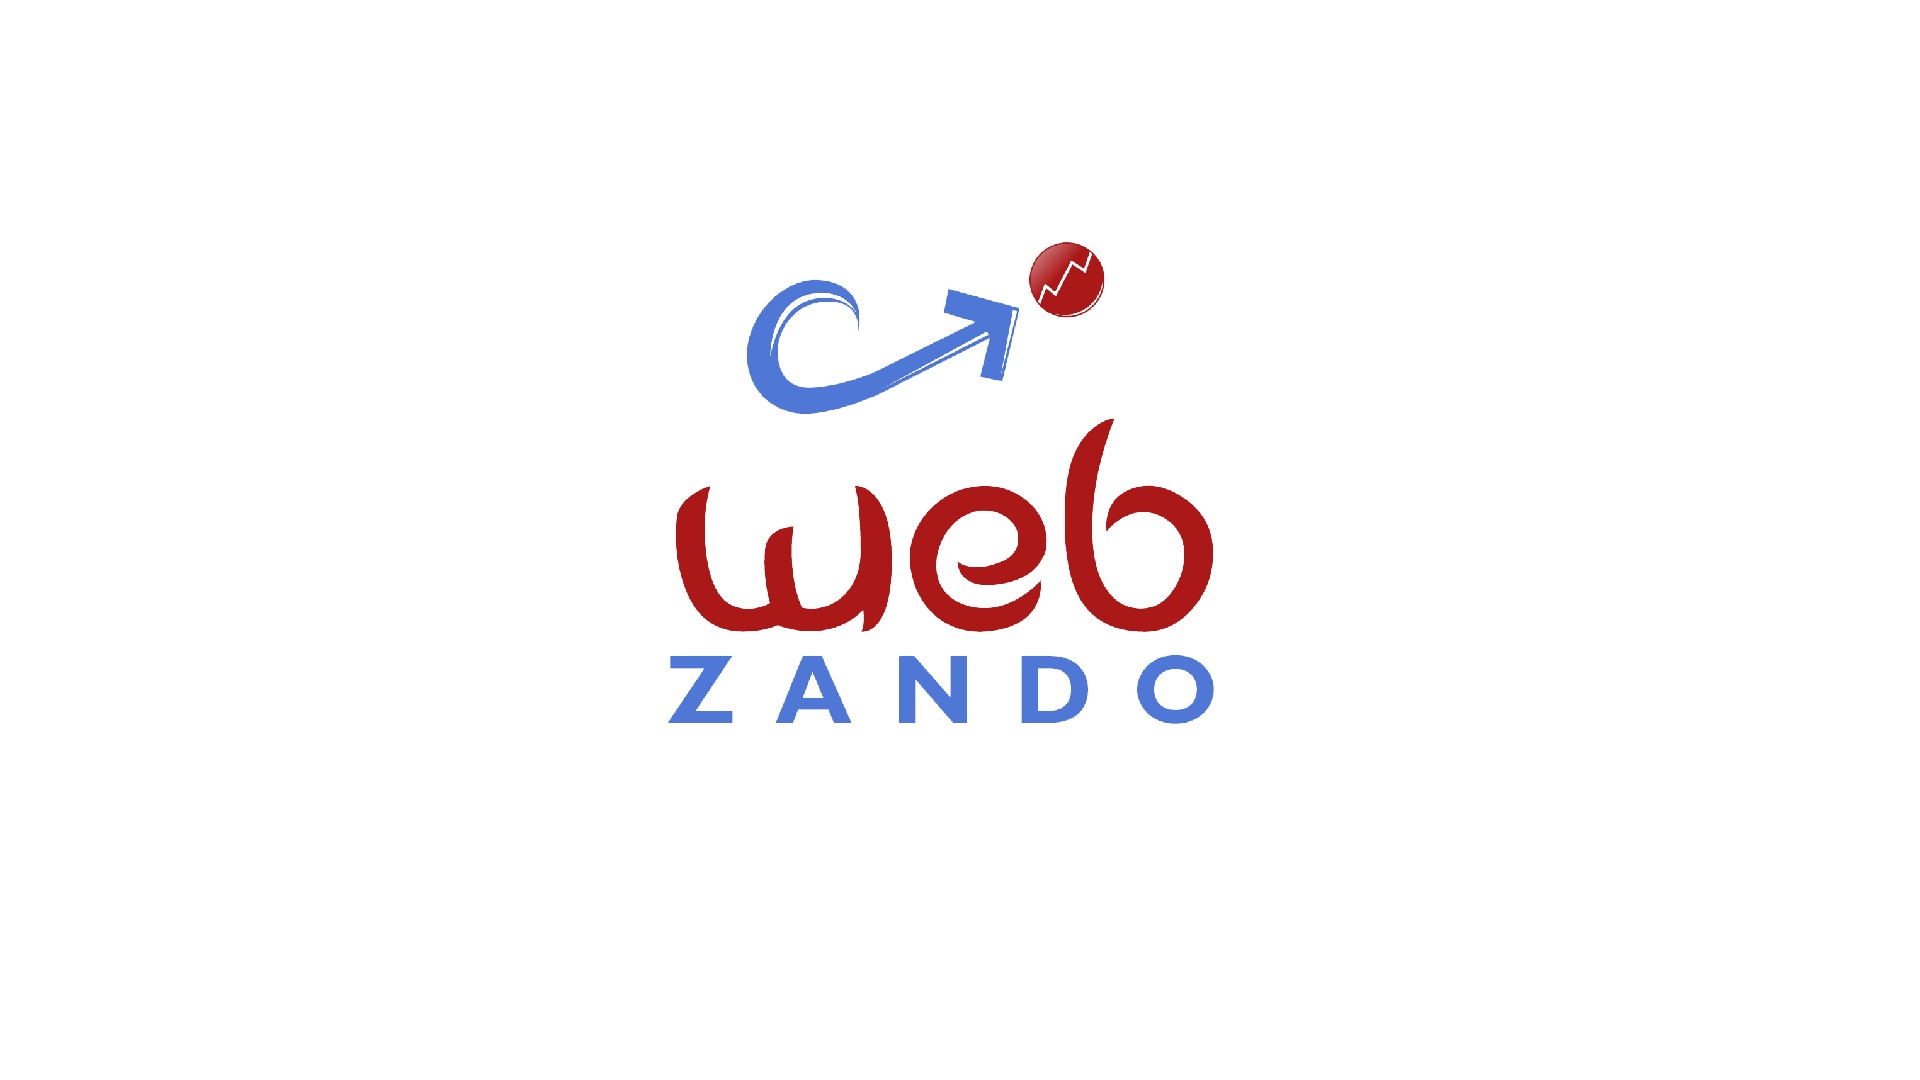 loop not working - Web Zando